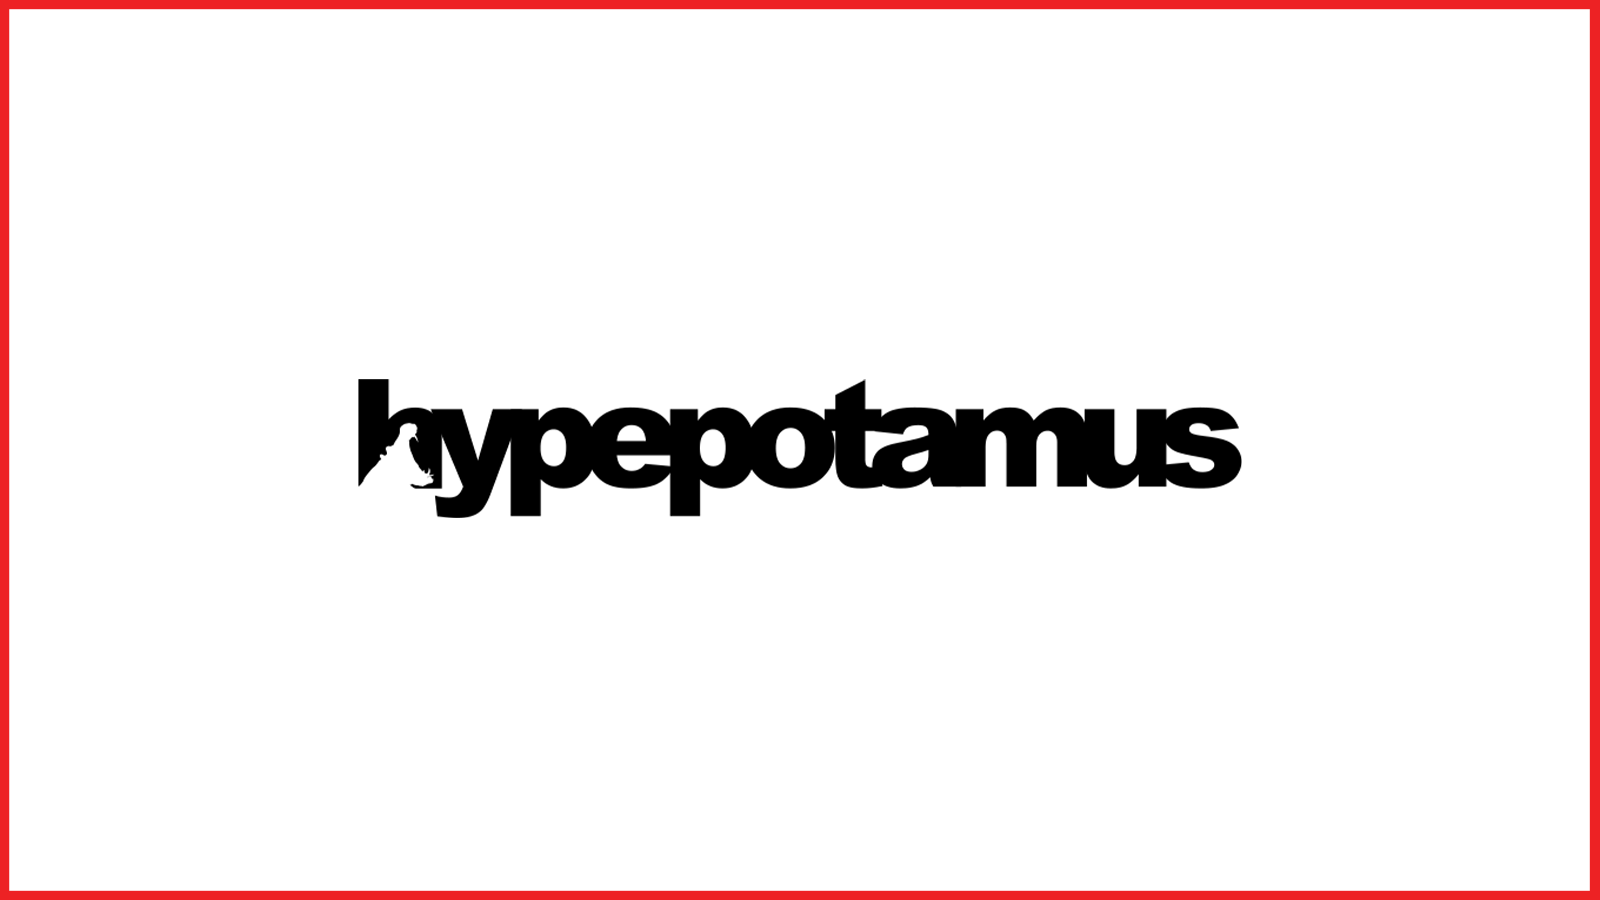 hypepotamus logo with red border